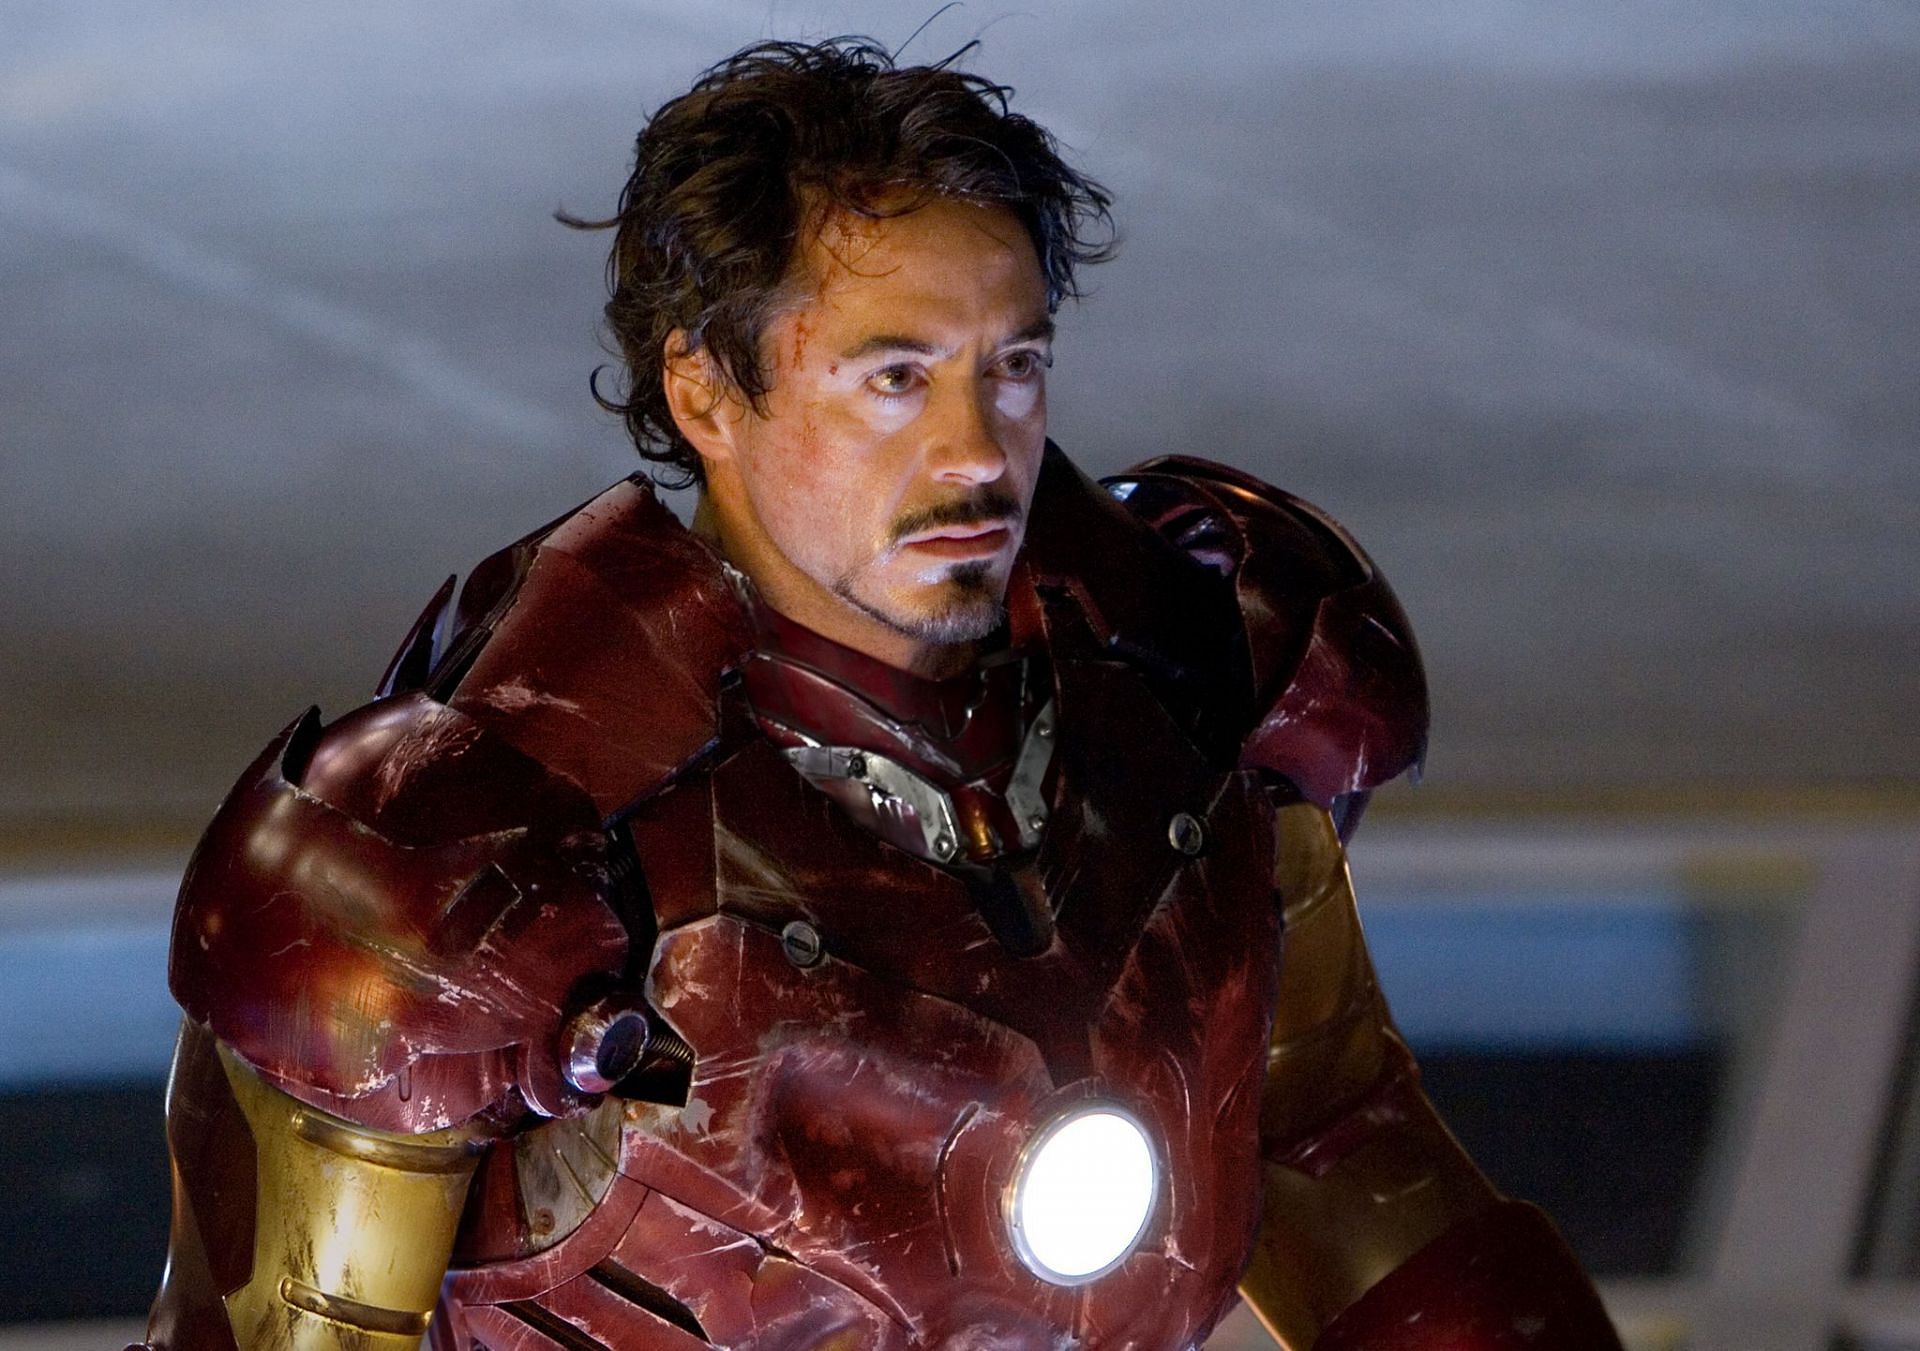 Iron Man in his armored suit (Image via Marvel Studios)